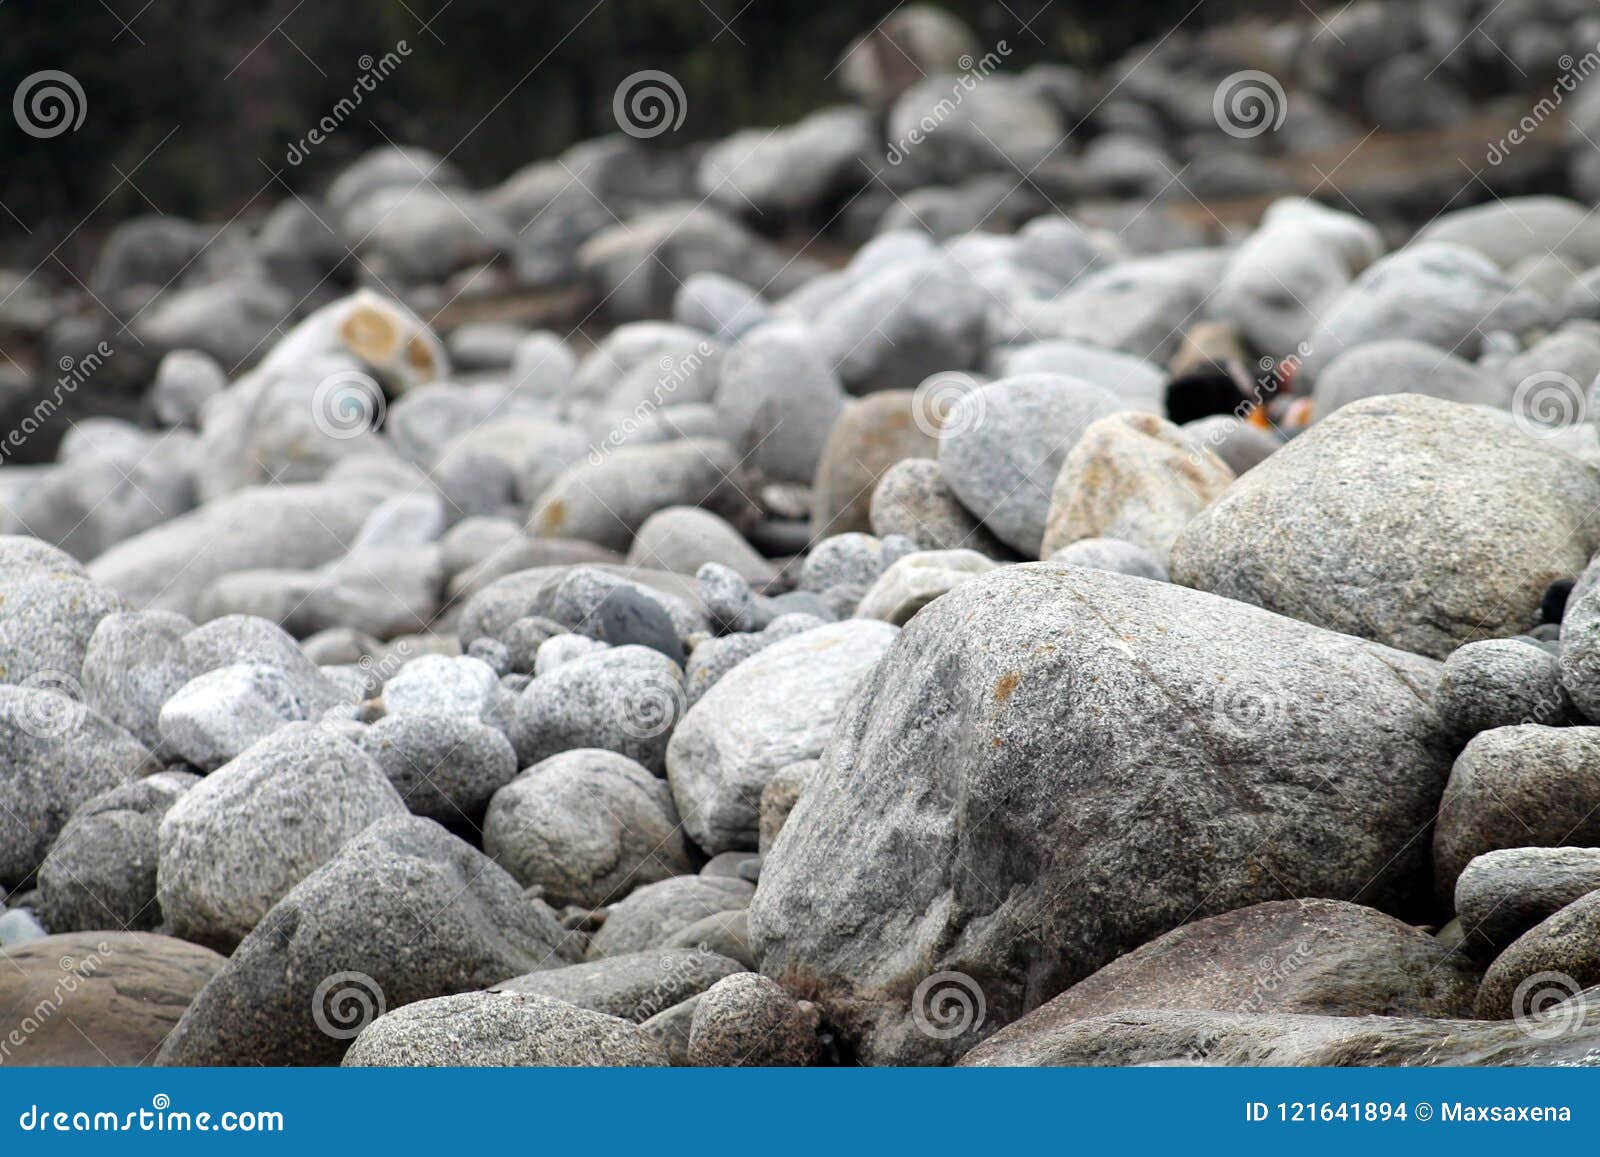 Beautiful River Stone / Rock Wallpaper Stock Photo - Image of prayer,  metal: 121641894